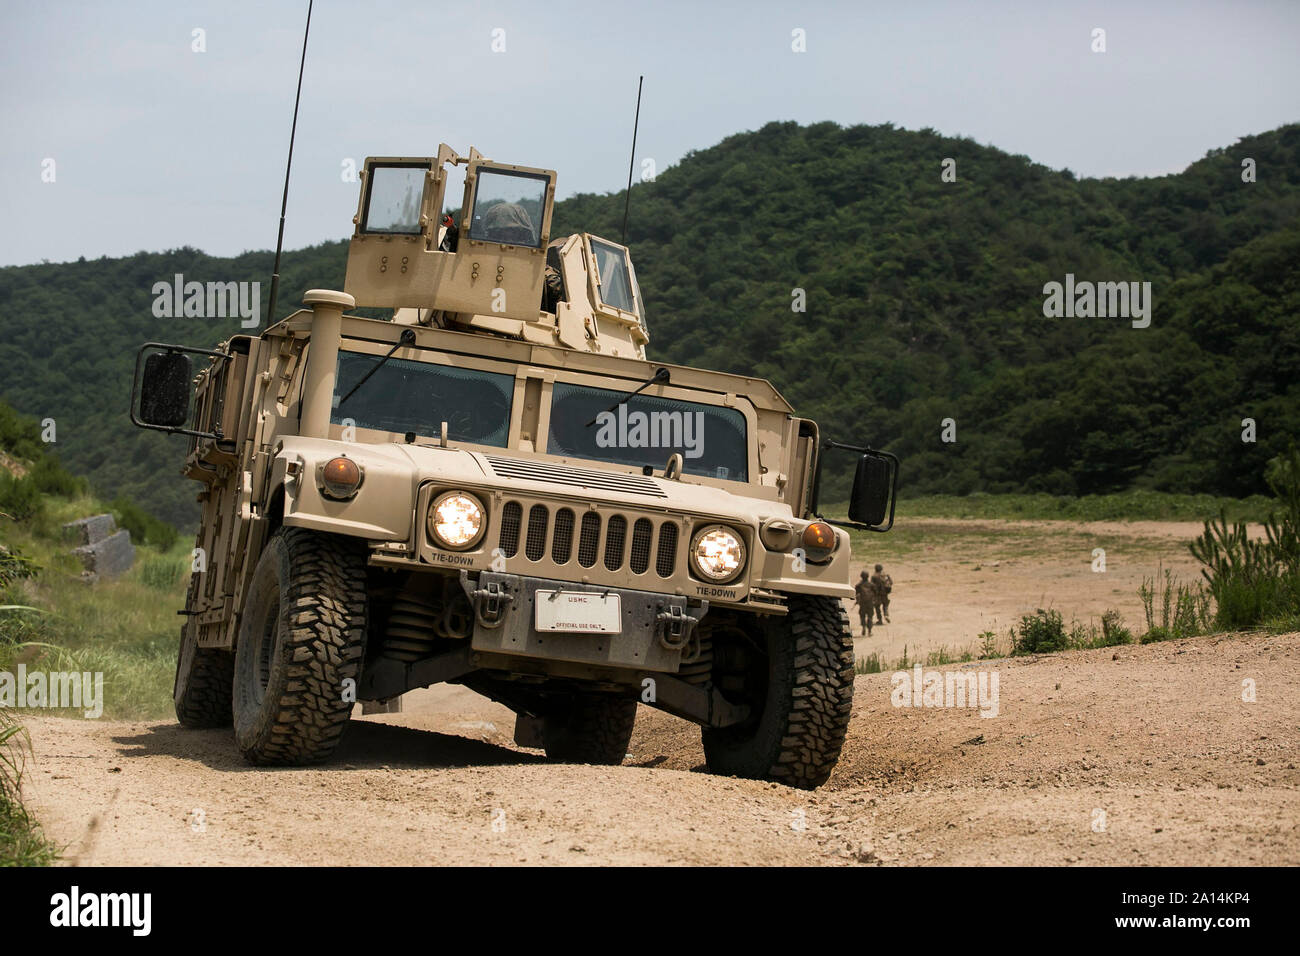 U.S. Marines drive a Humvee at the Sanseori Range in Pohang, Republic of Korea. Stock Photo